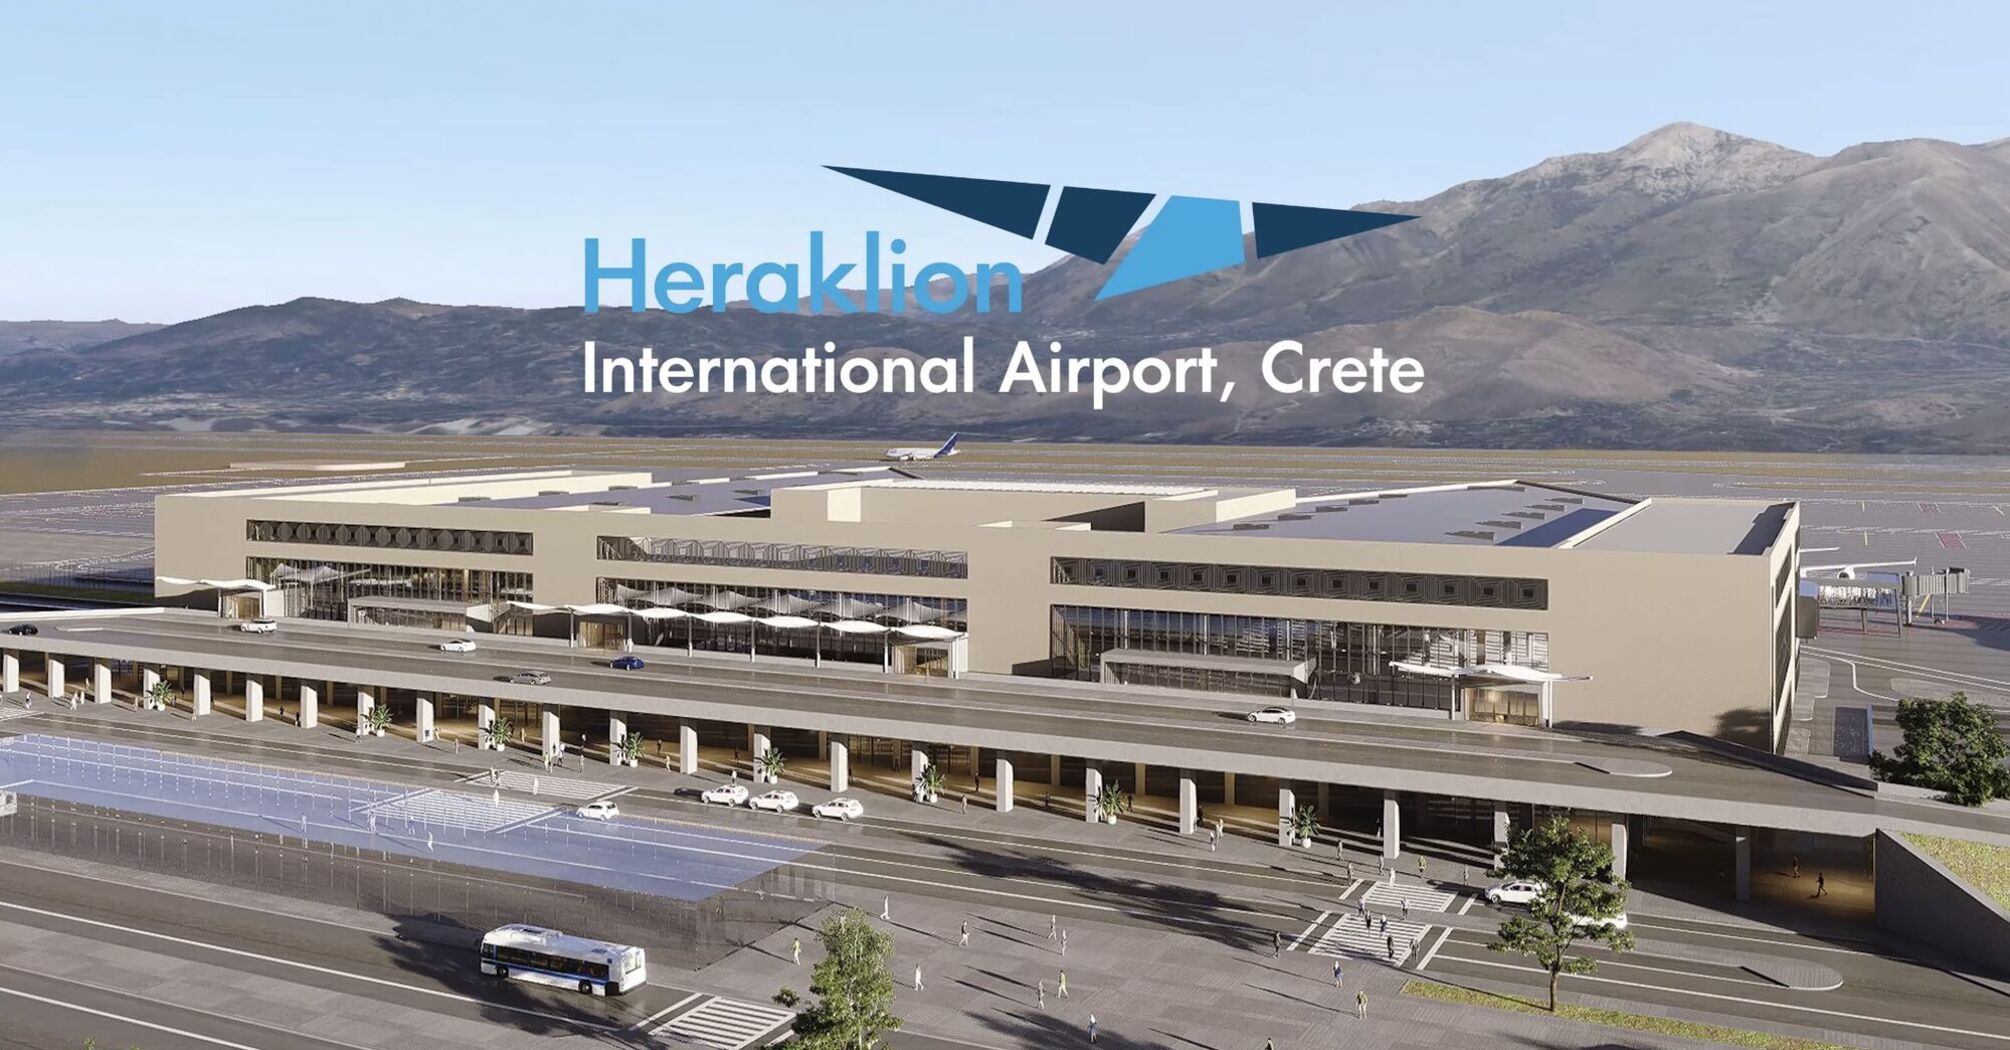 Heraklion Airport in Crete